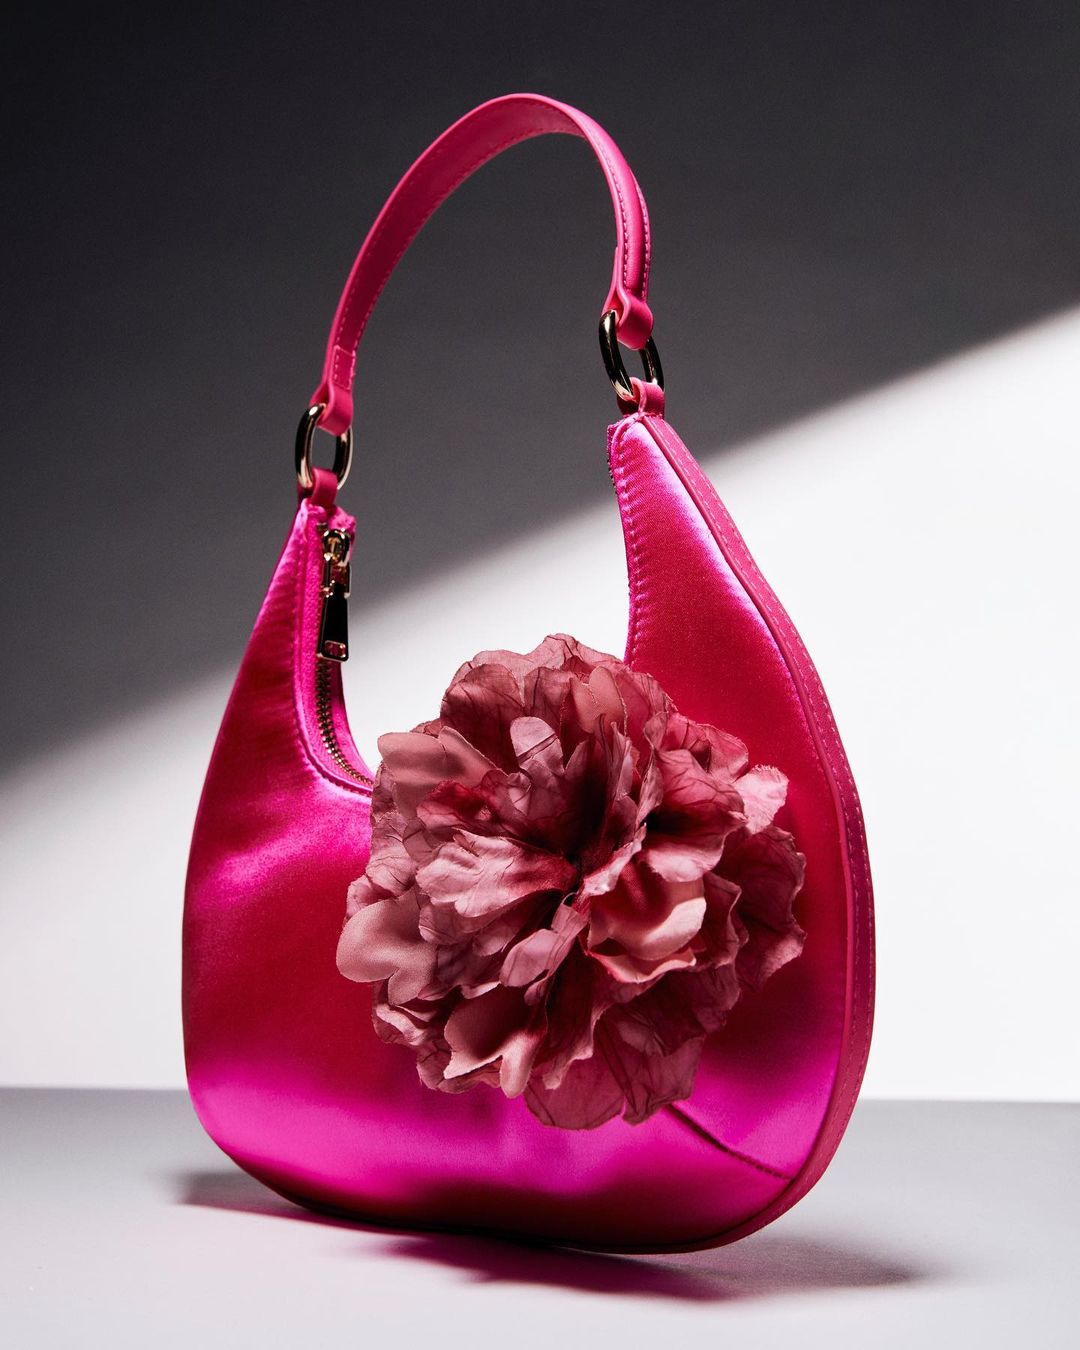 image of a satin fuschia handbag with a floral accent